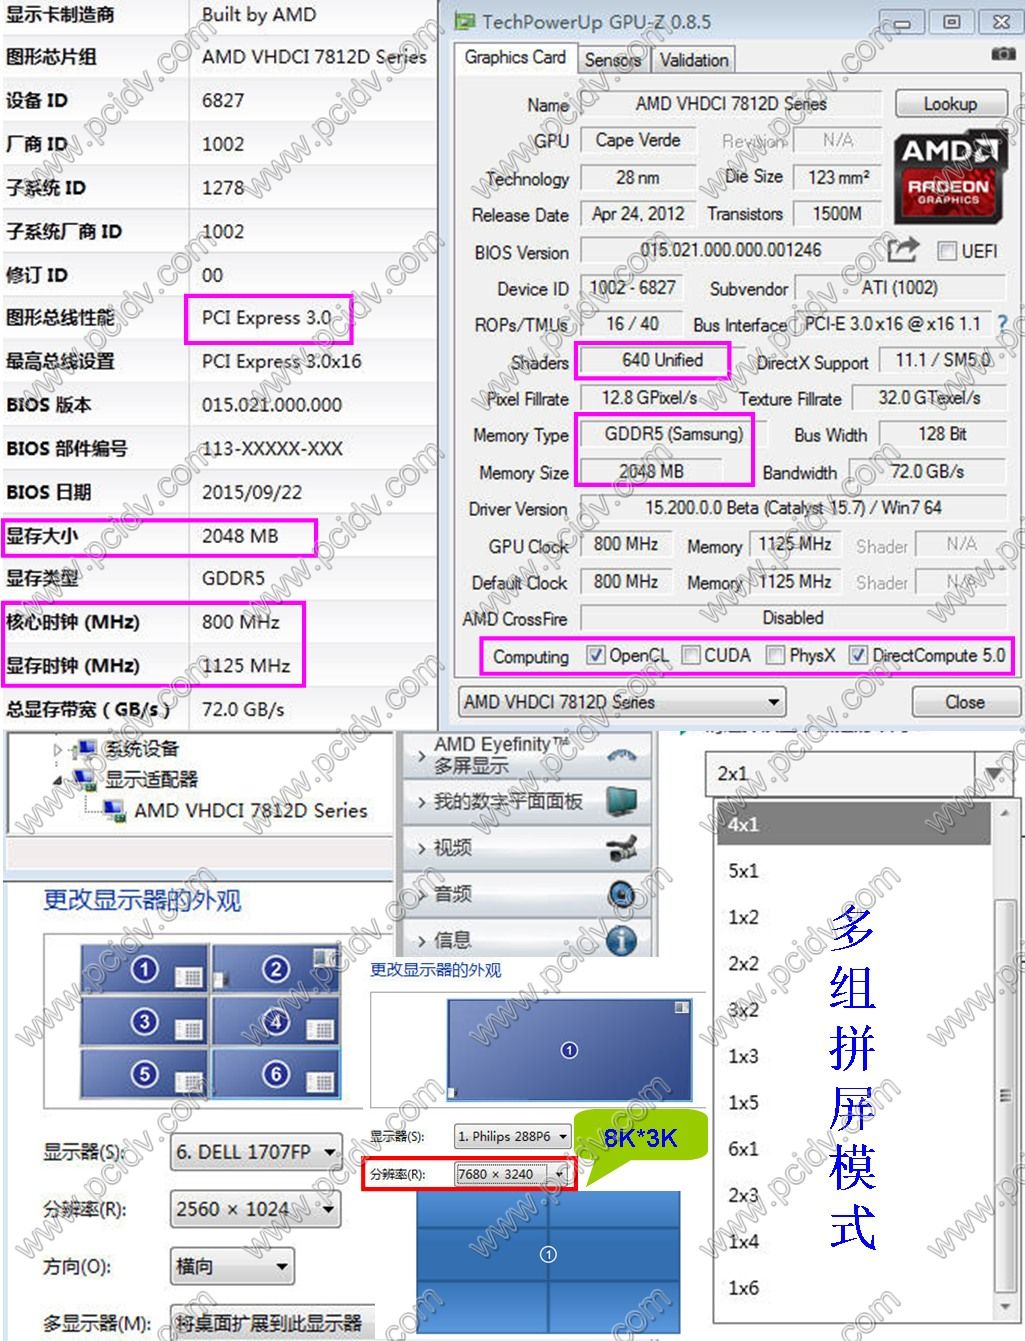 pcidv.com/拼接屏12屏显卡VHDCI 7812D硬件参数及组屏模式